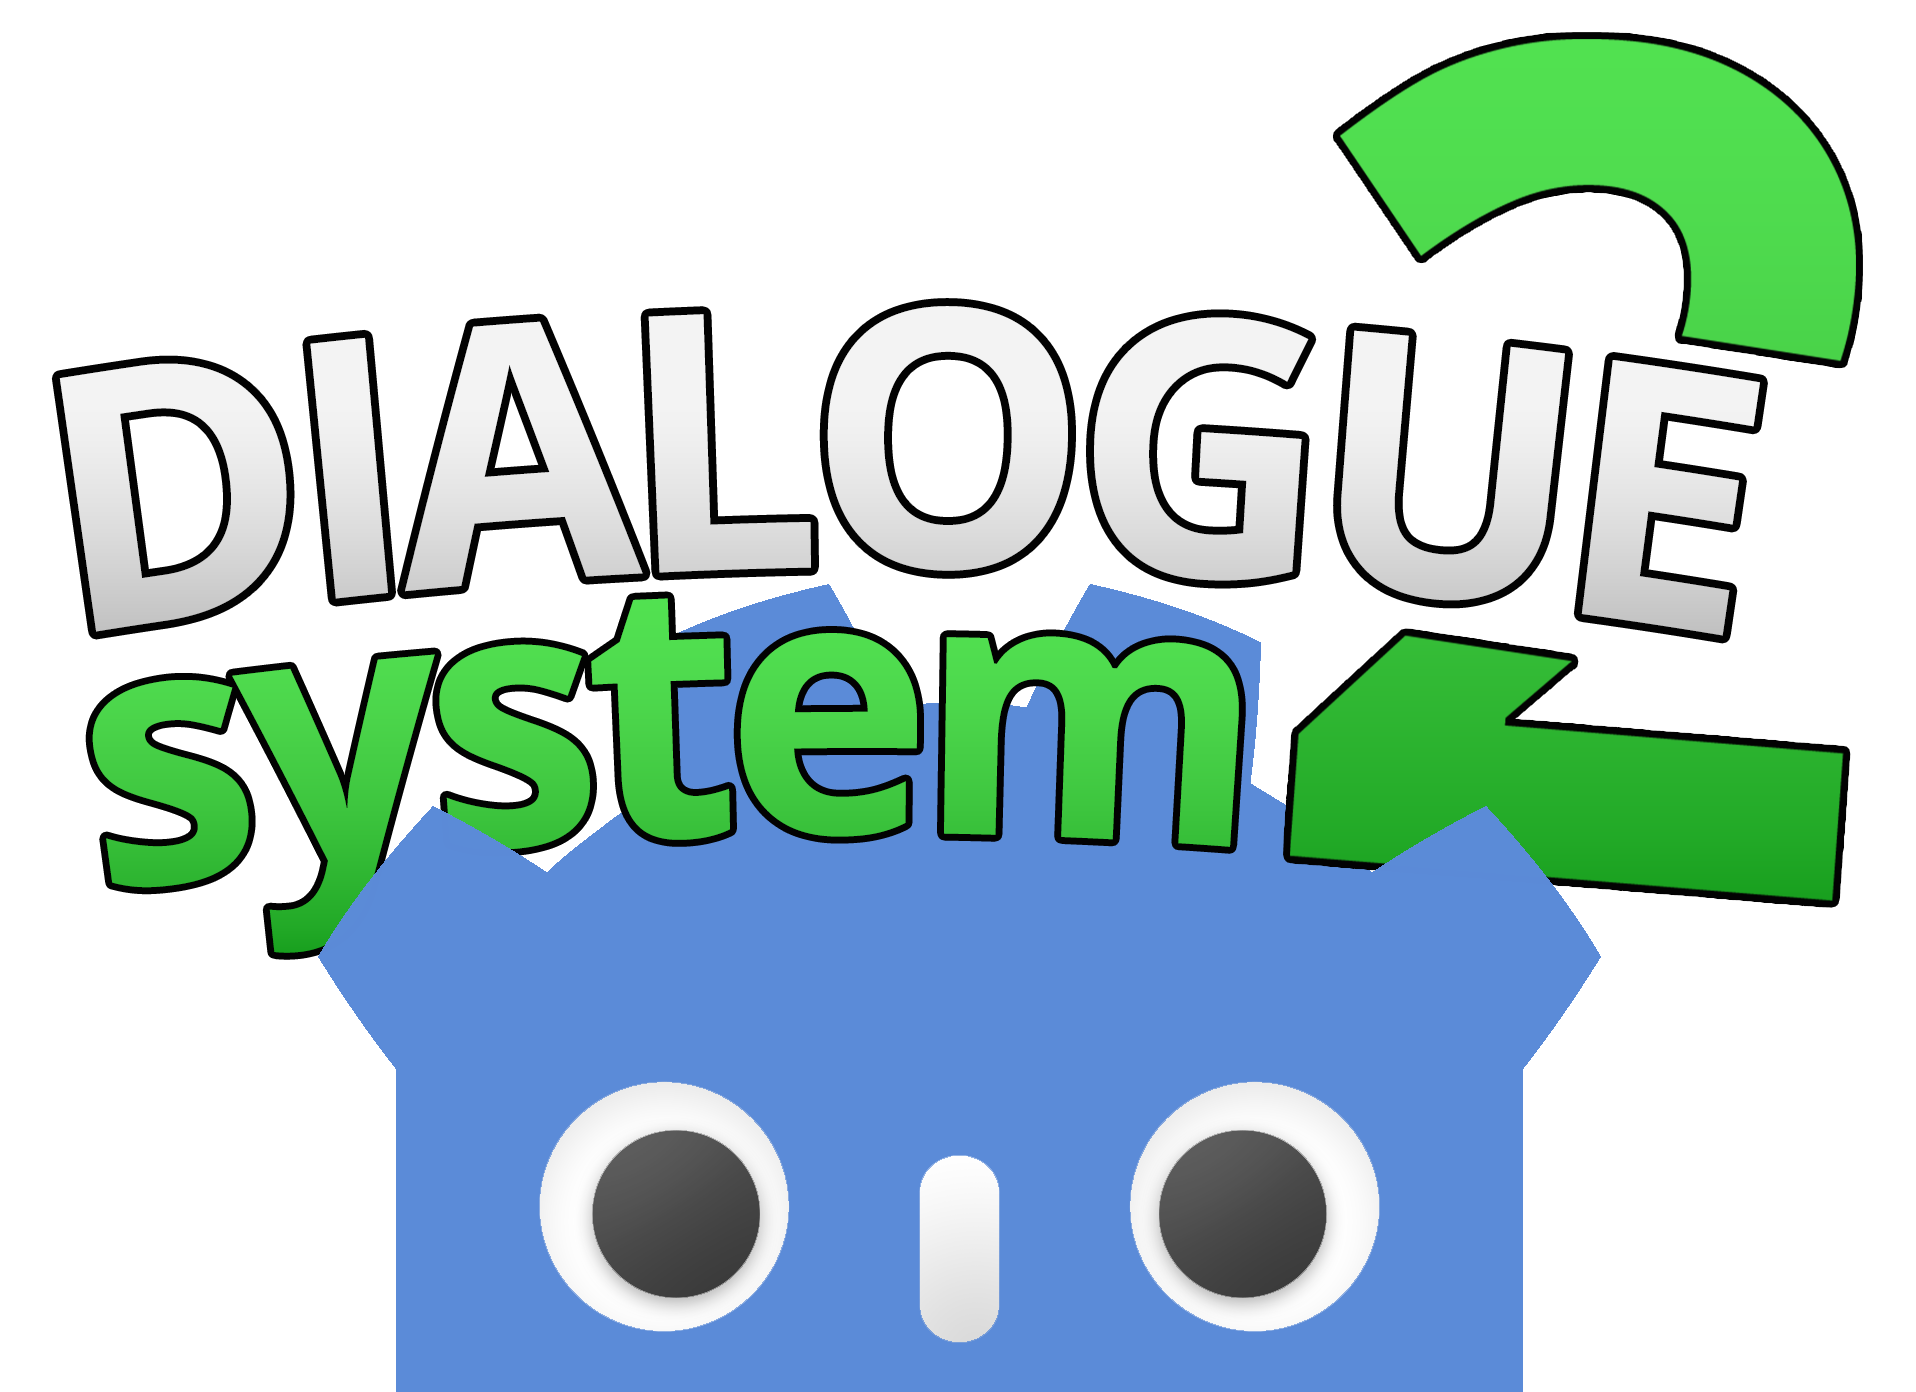 Godot Dialogue System 2